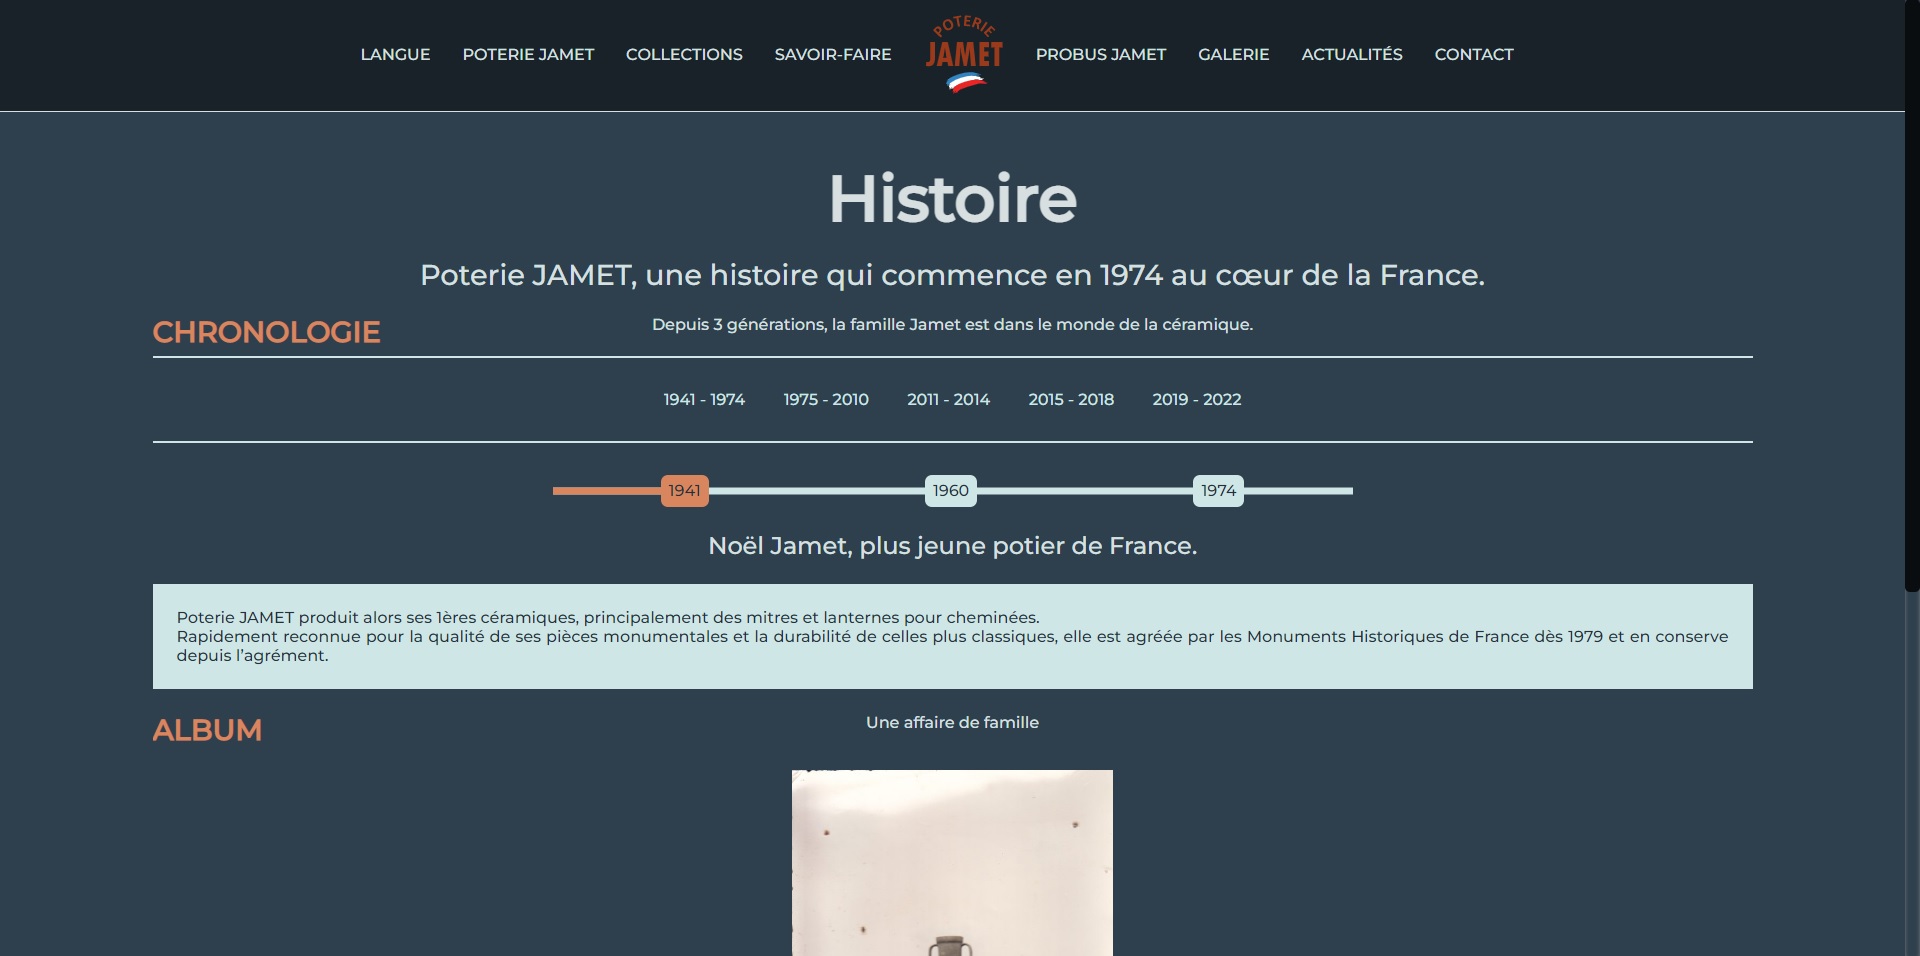 History page of poterie jamet website